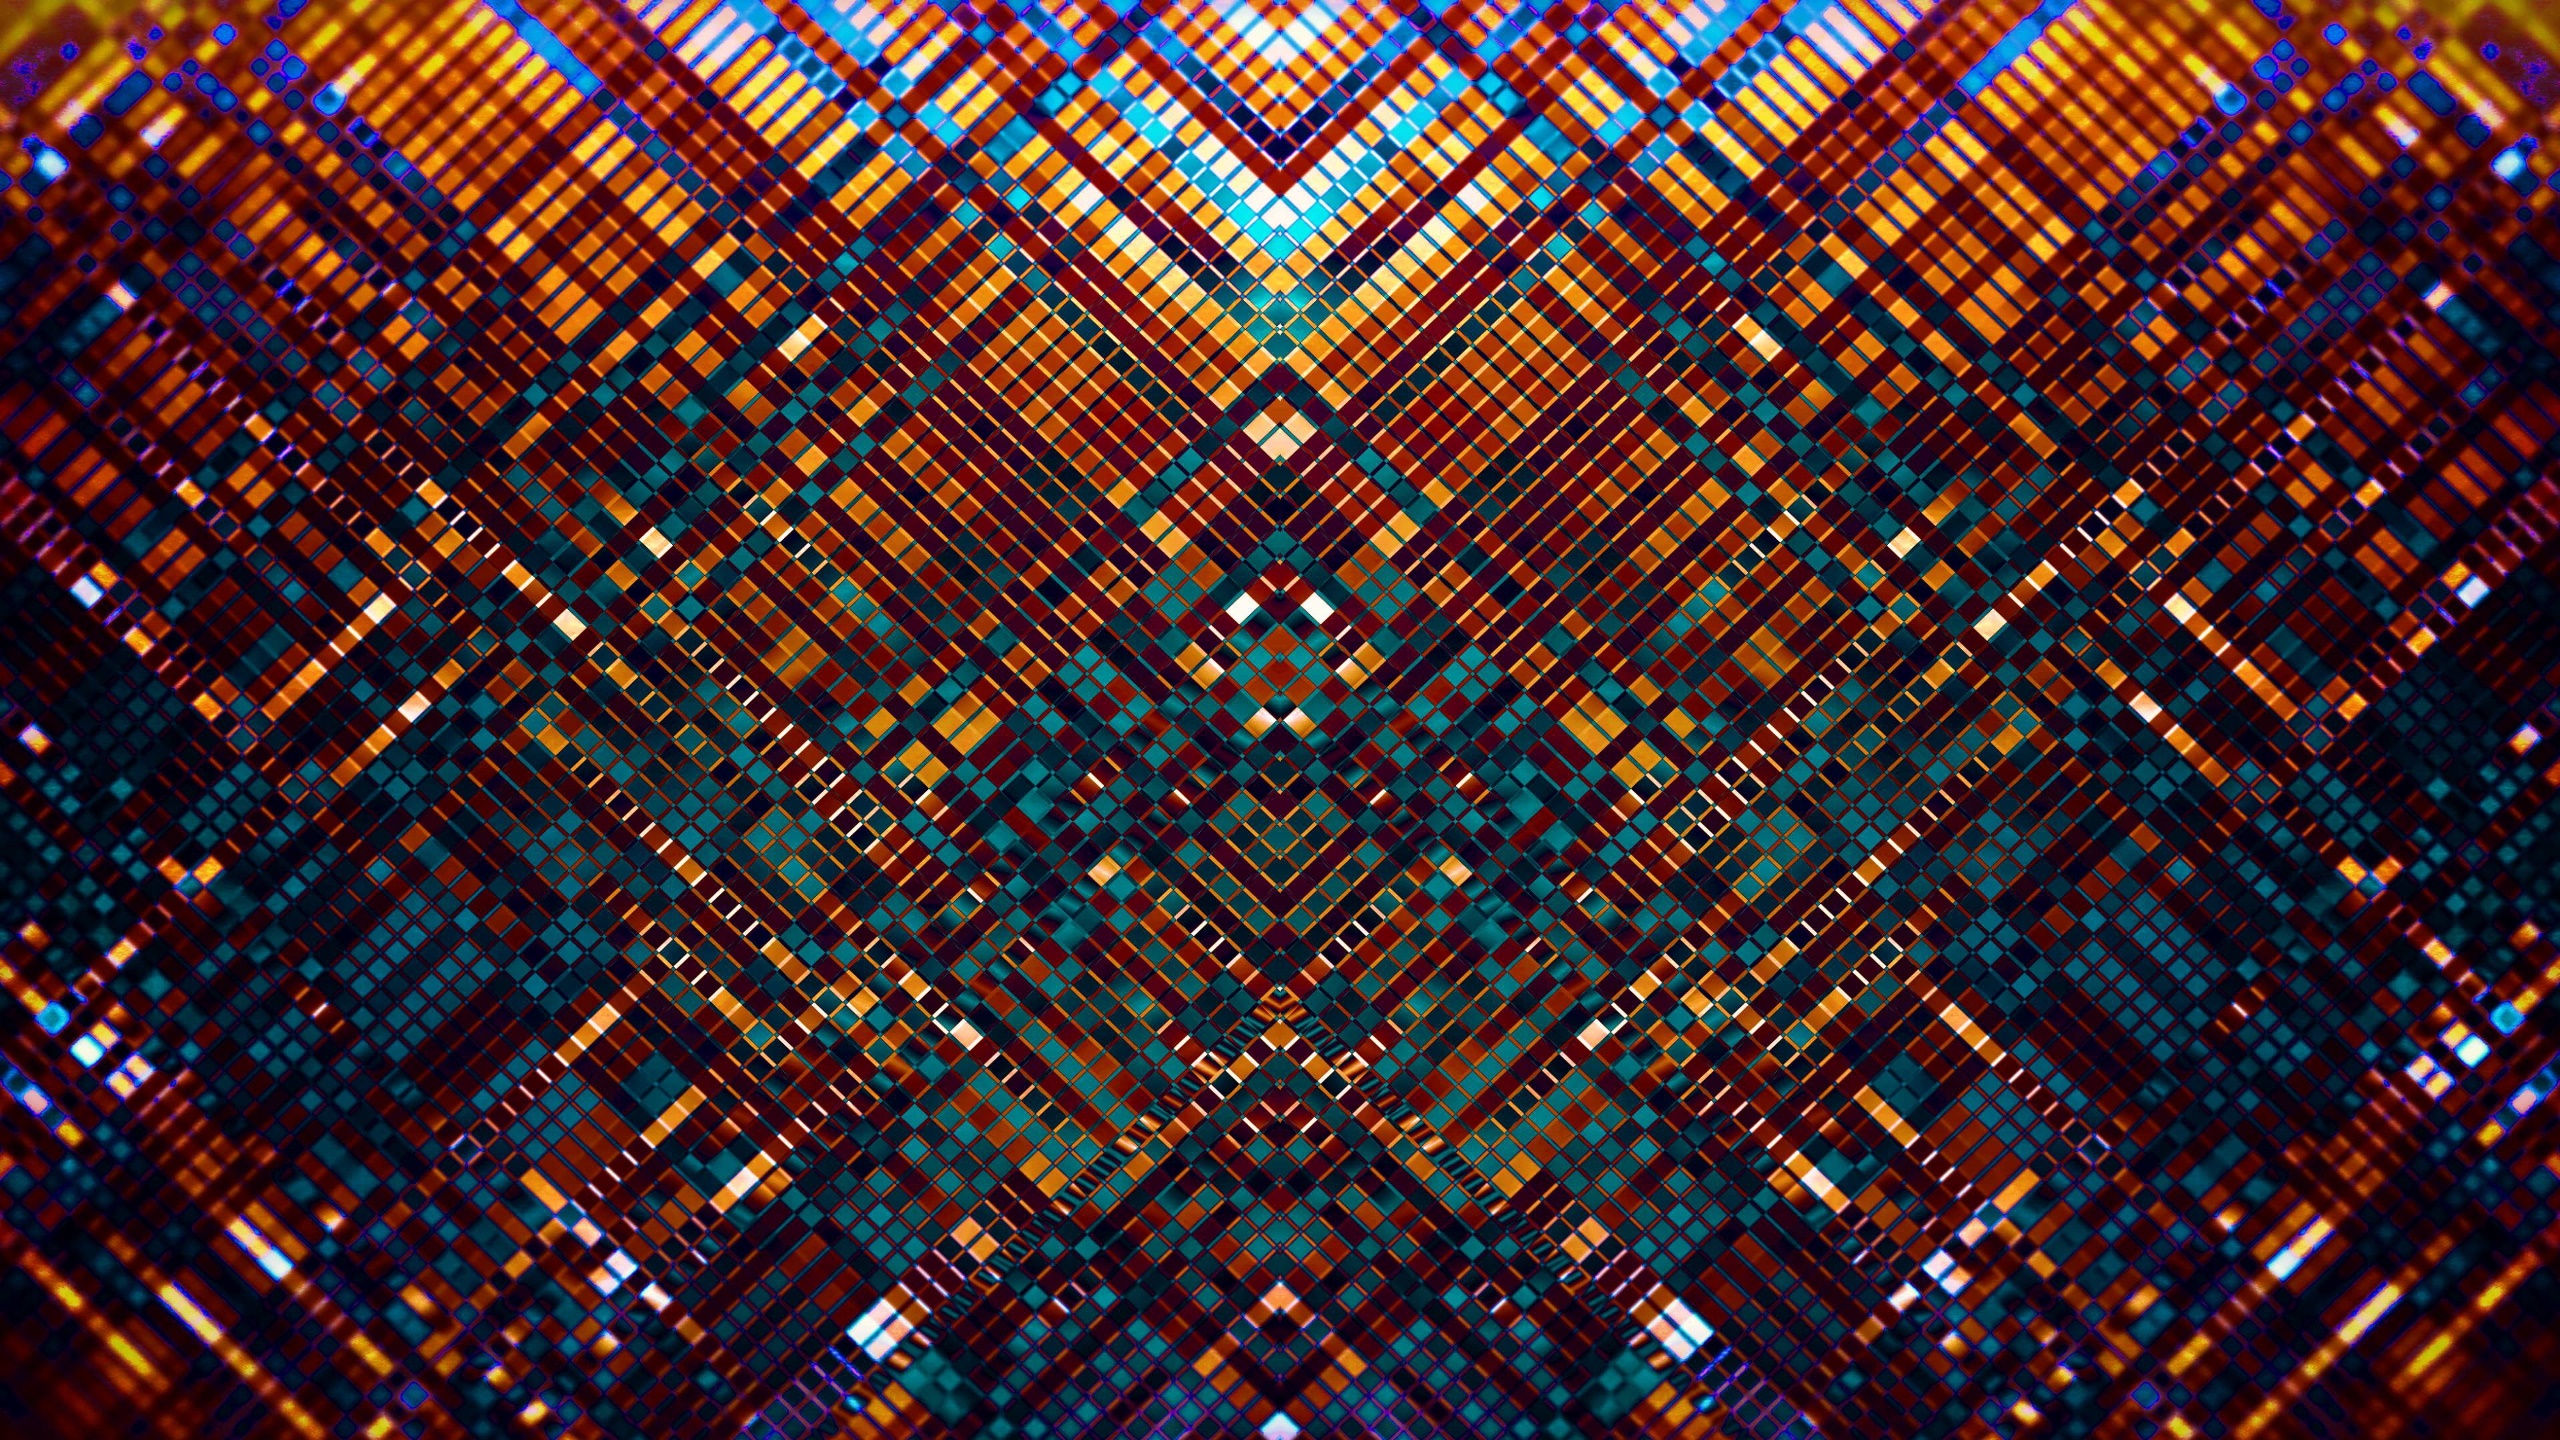 Abstract Colorful Artwork Digital Art Mosaic 2560x1440